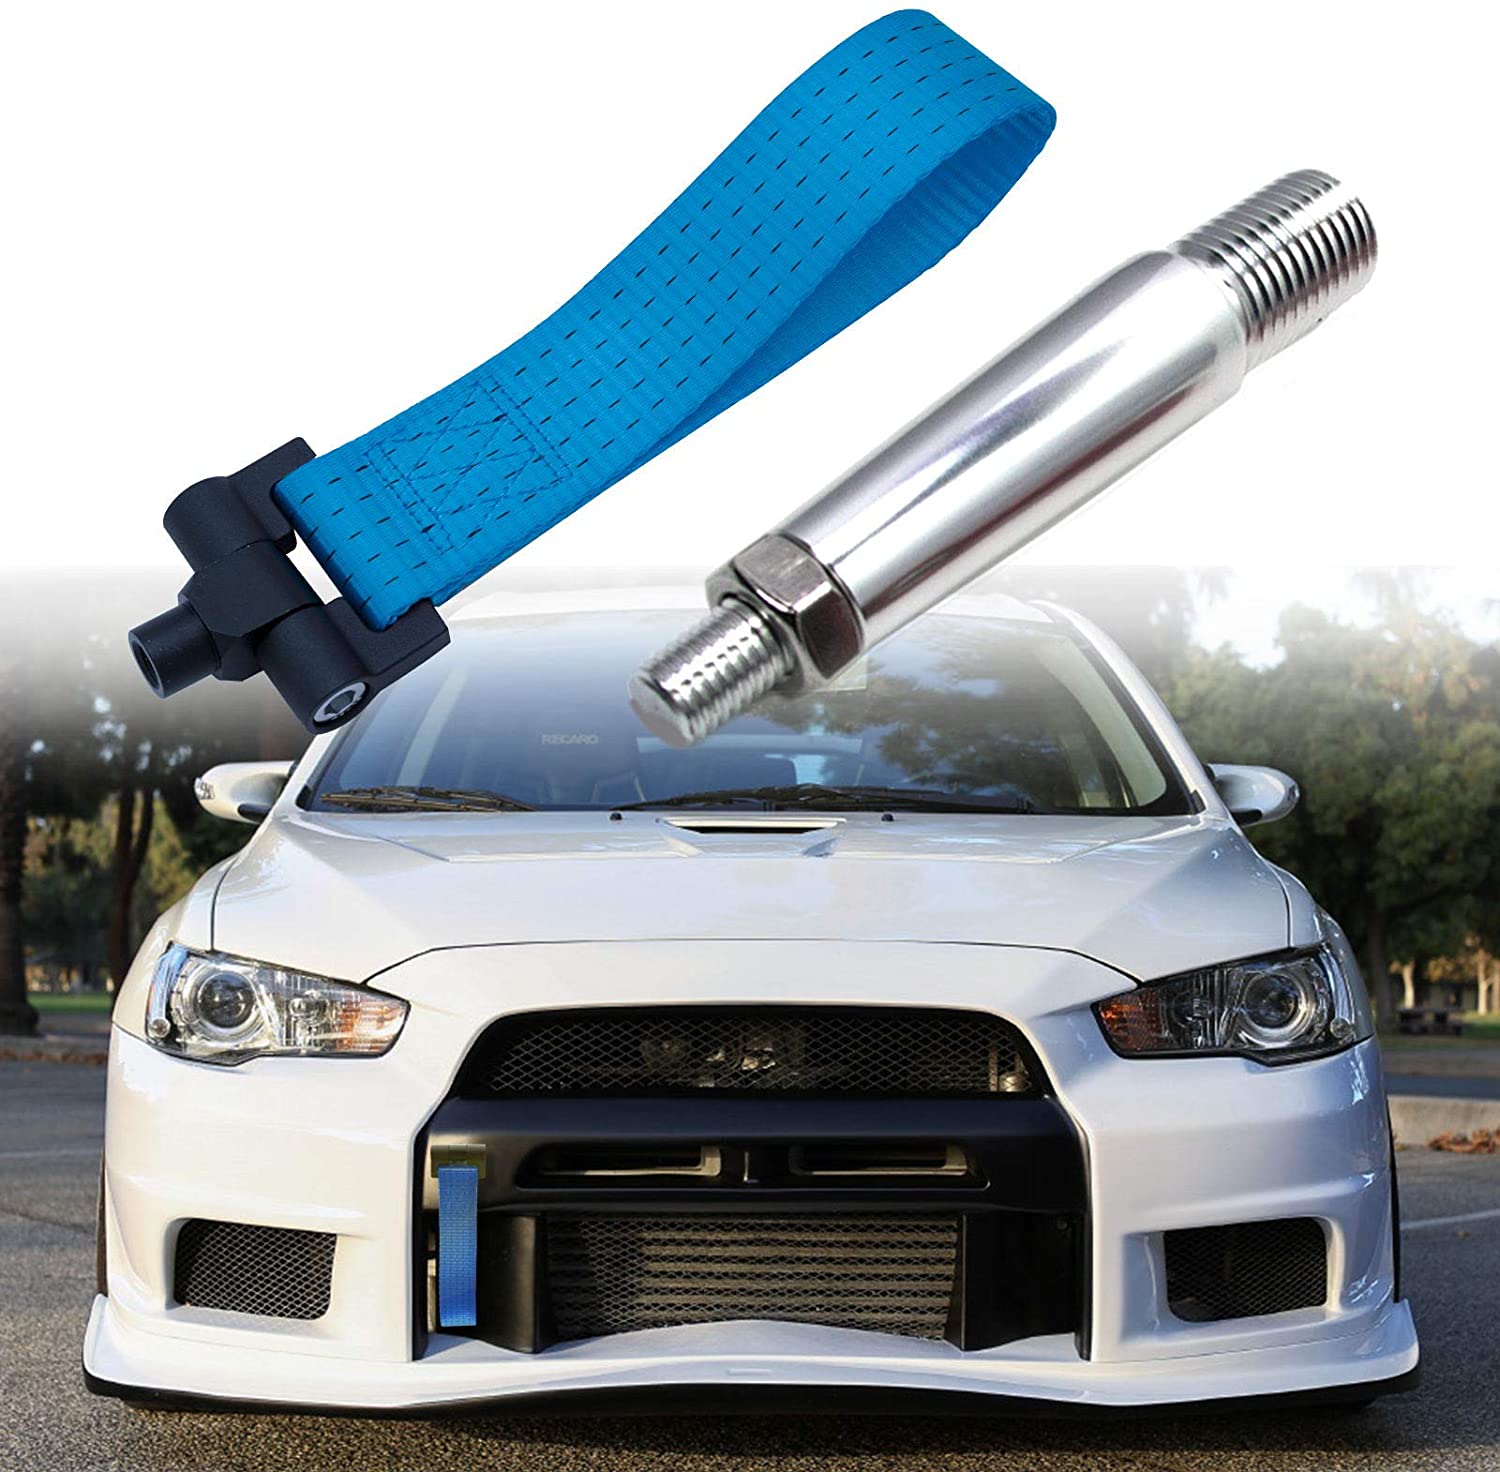 Xotic Tech JDM Track Racing Style Tow Hook Adapter w/Blue Strap Holder Kit for Nissan 370Z GT-R R35 Juke,Fits Infiniti G37/Q60 FX35 FX45 FX50 QX70 (Blue)